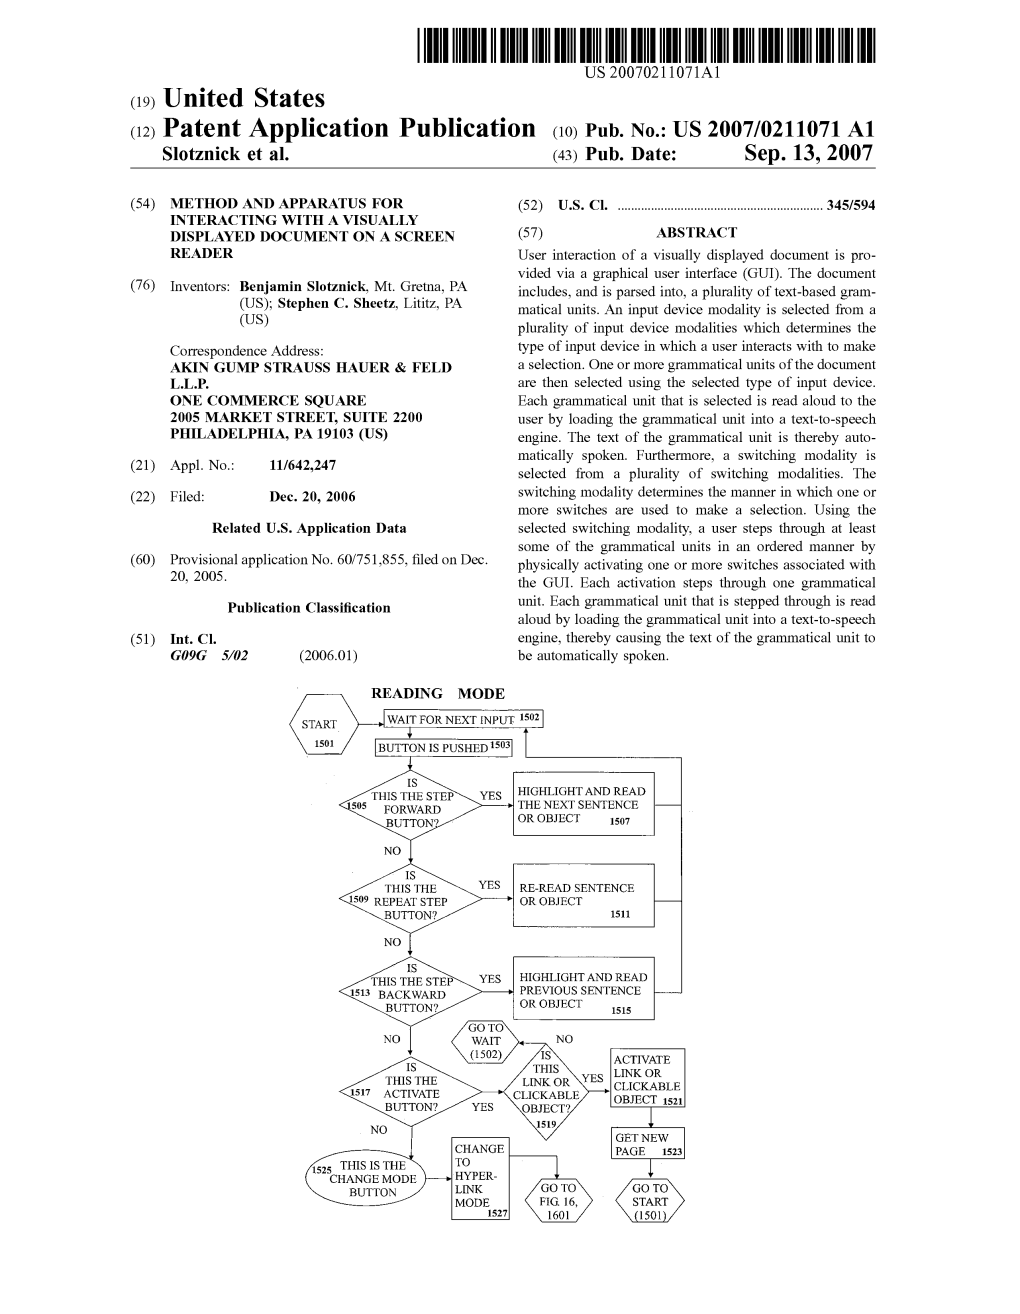 (12) Patent Application Publication (10) Pub. No.: US 2007/0211071 A1 Slotznick Et Al